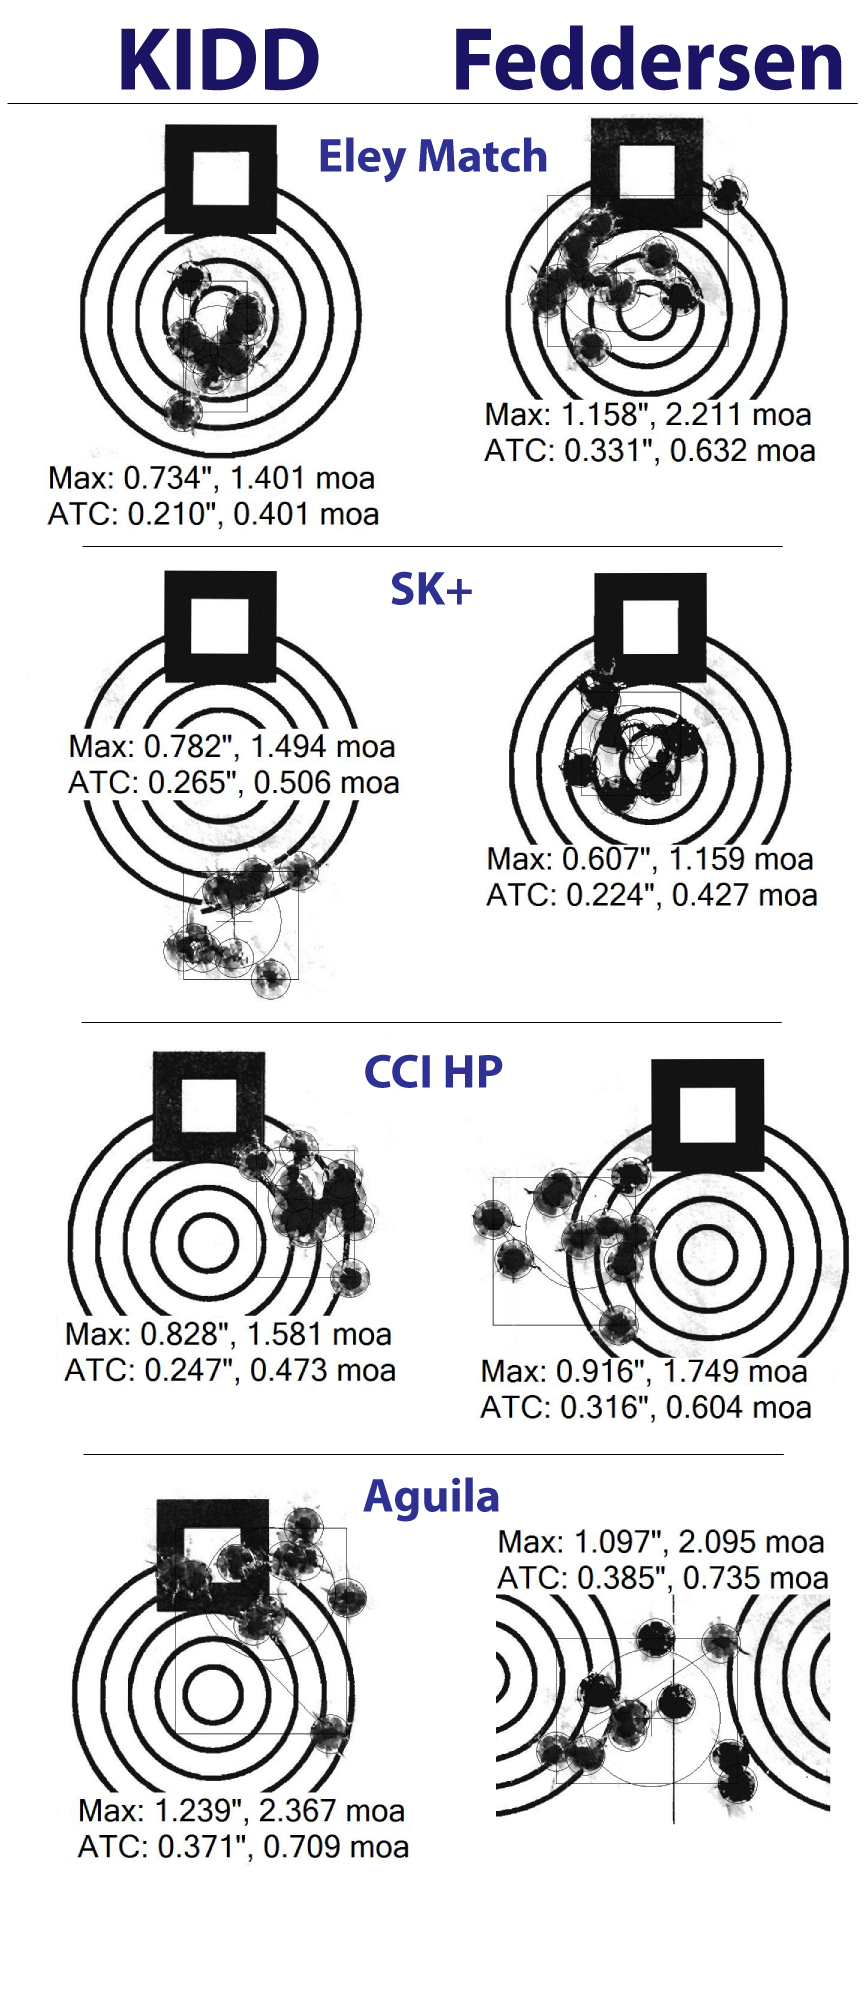 Targets from test of KIDD vs Feddersen rifles on different ammunition